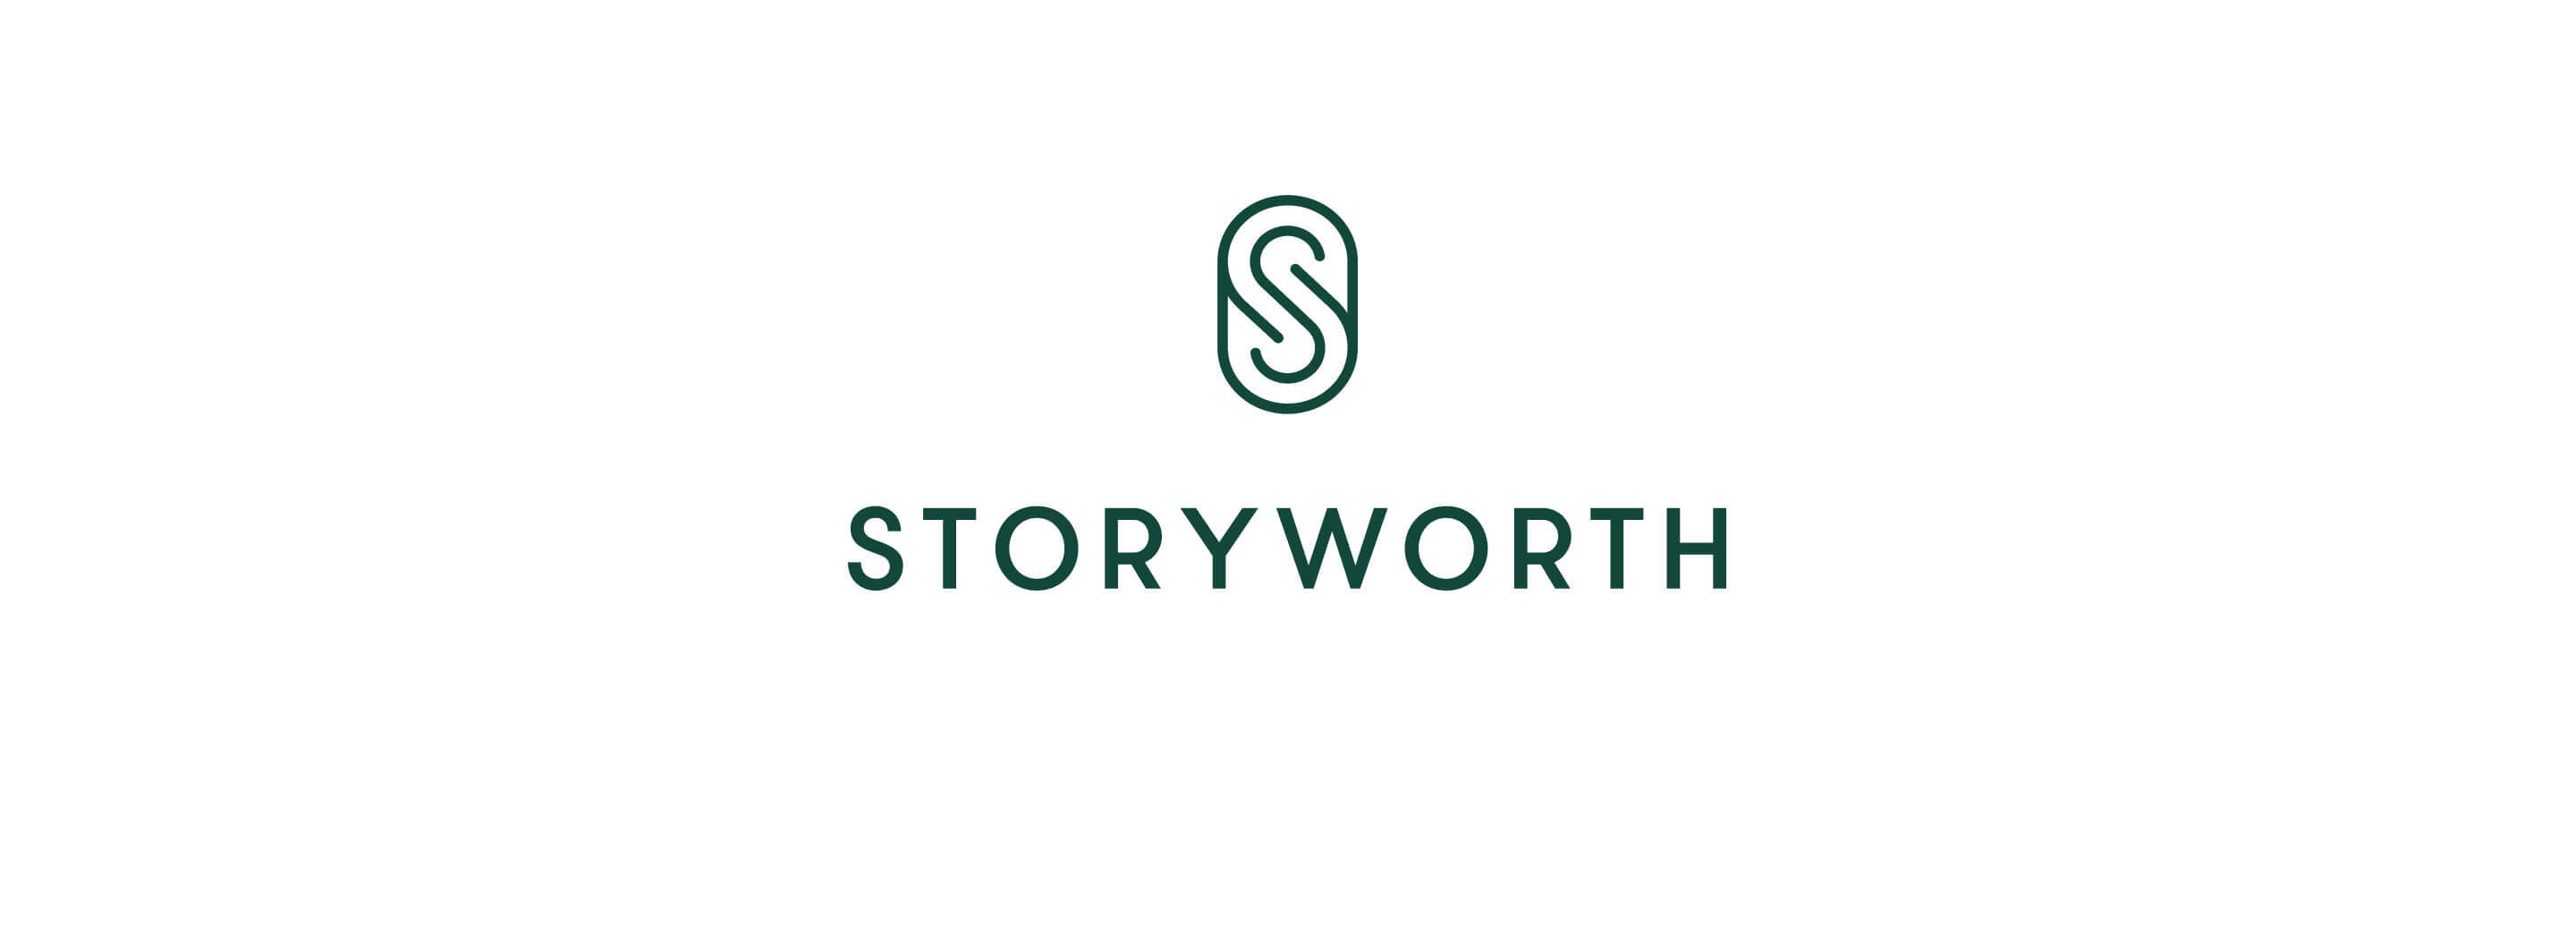 Storyworth brand design 3